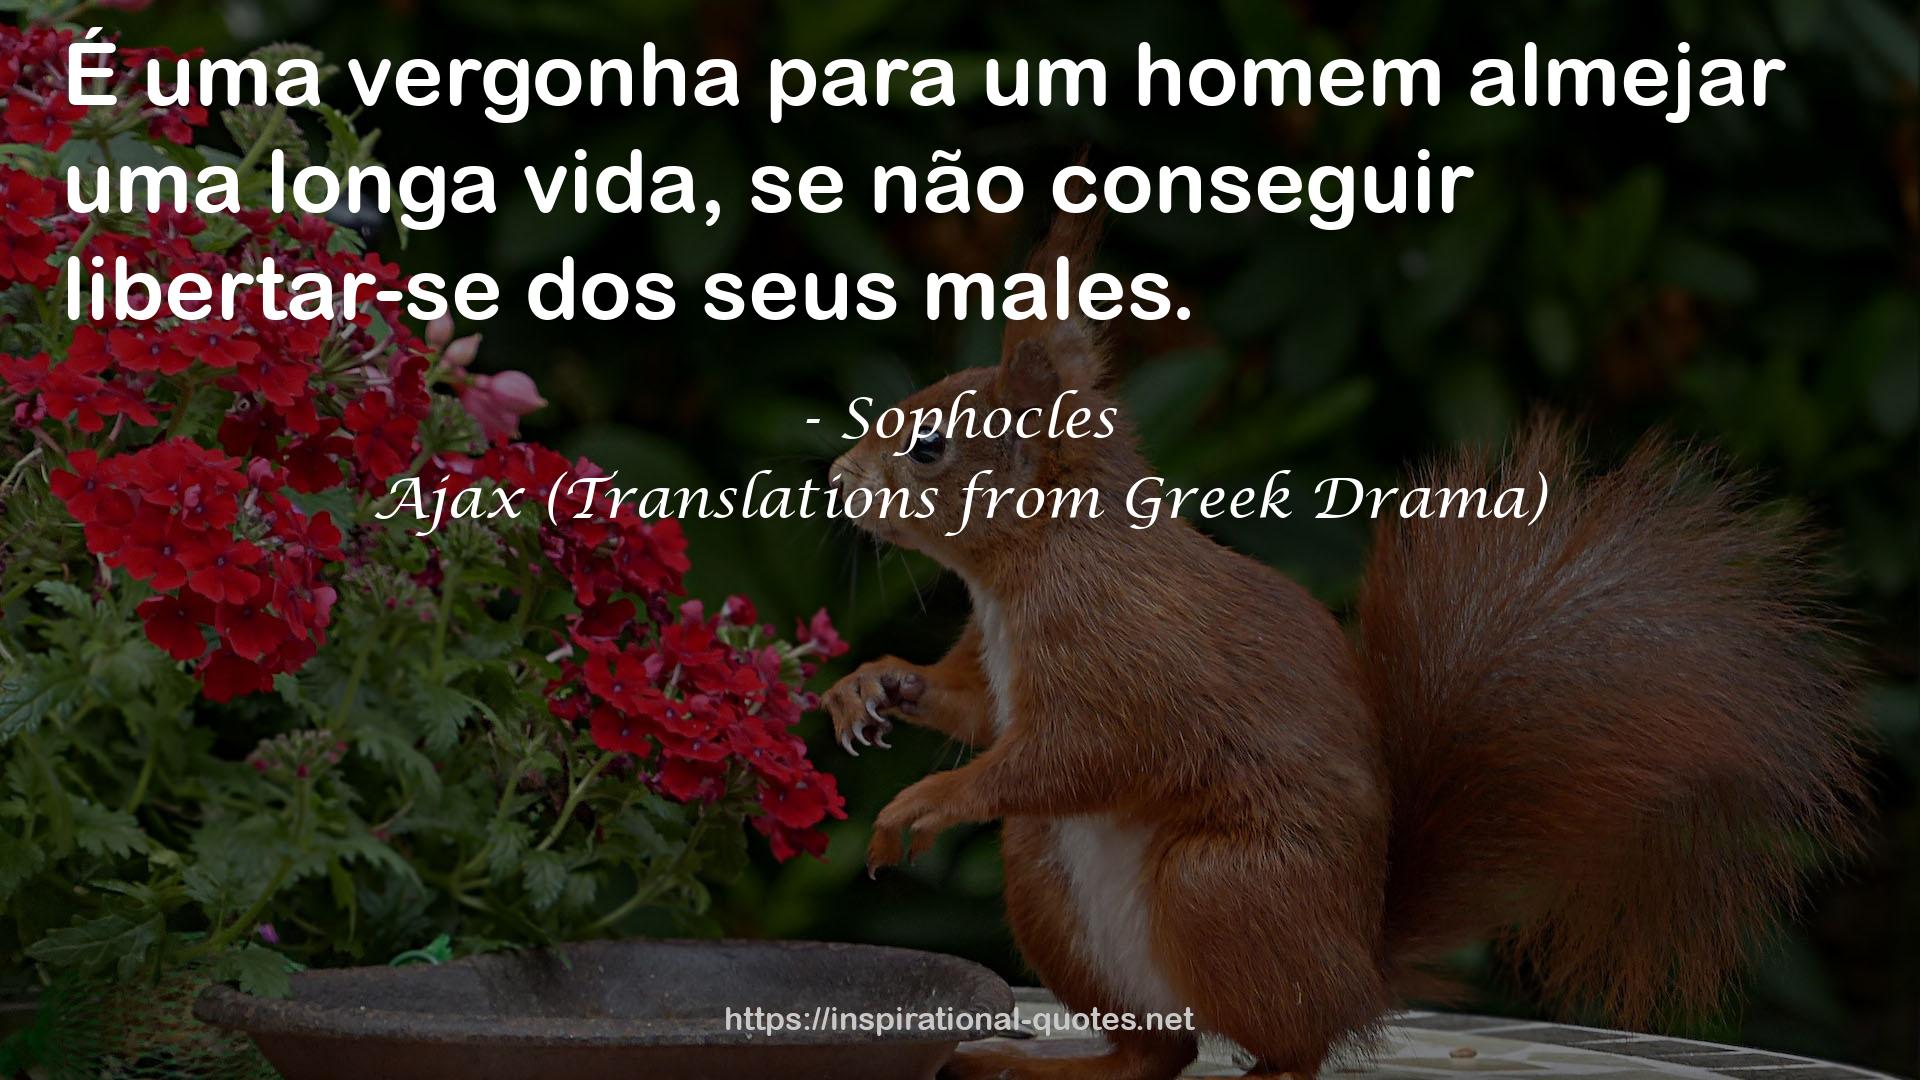 Ajax (Translations from Greek Drama) QUOTES